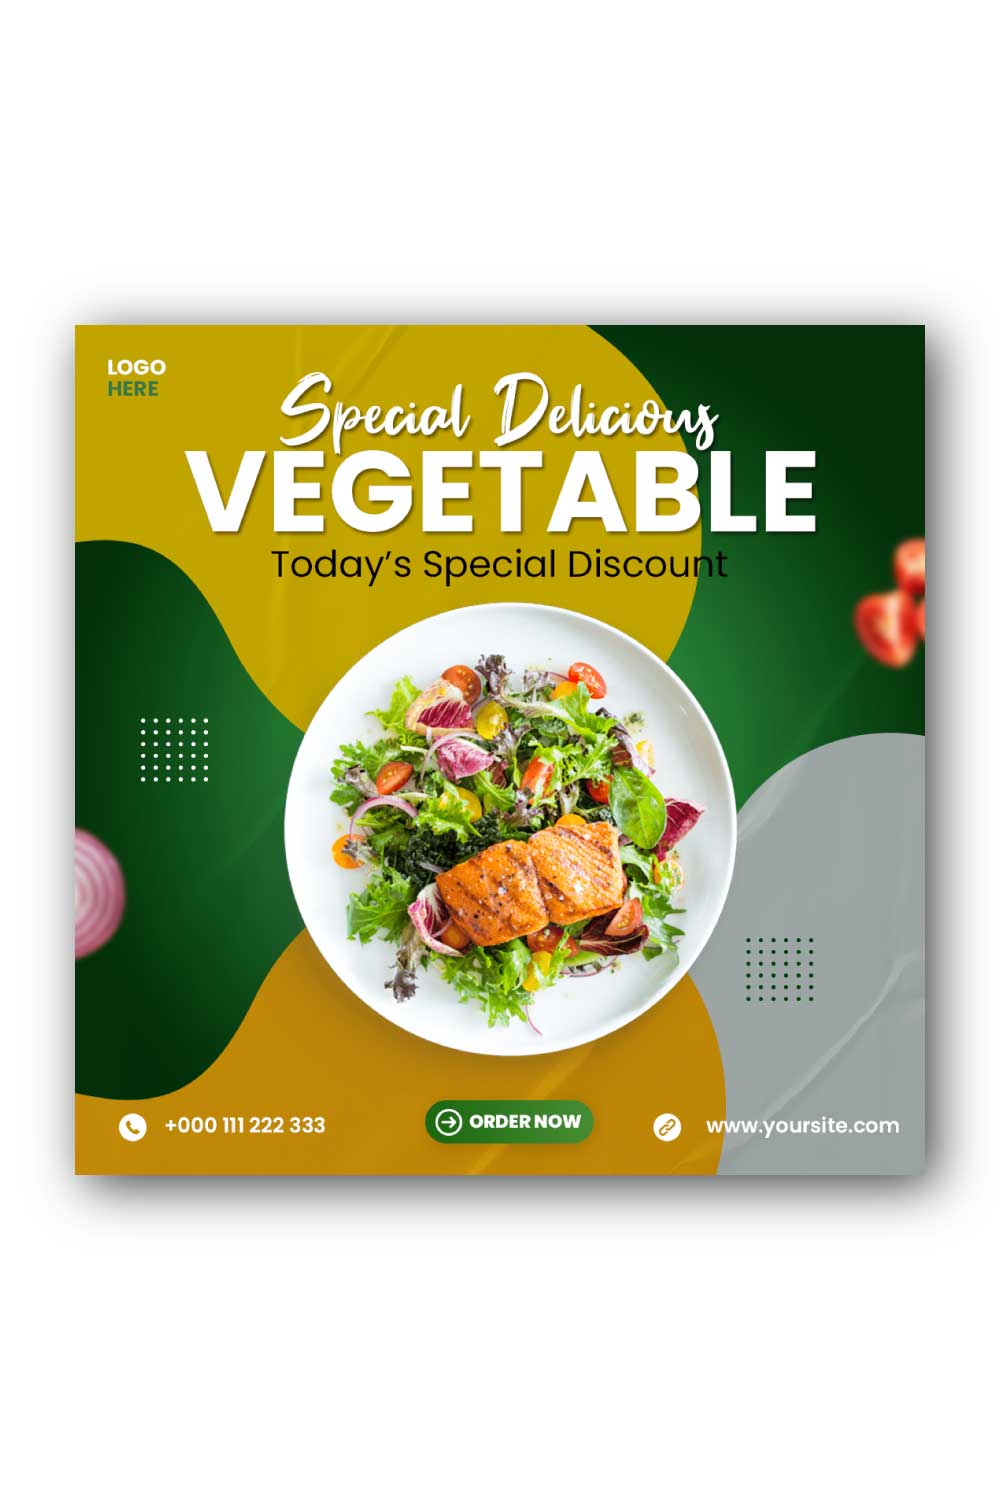 Vegetable food Social Media Instagram Post Template pinterest preview image.